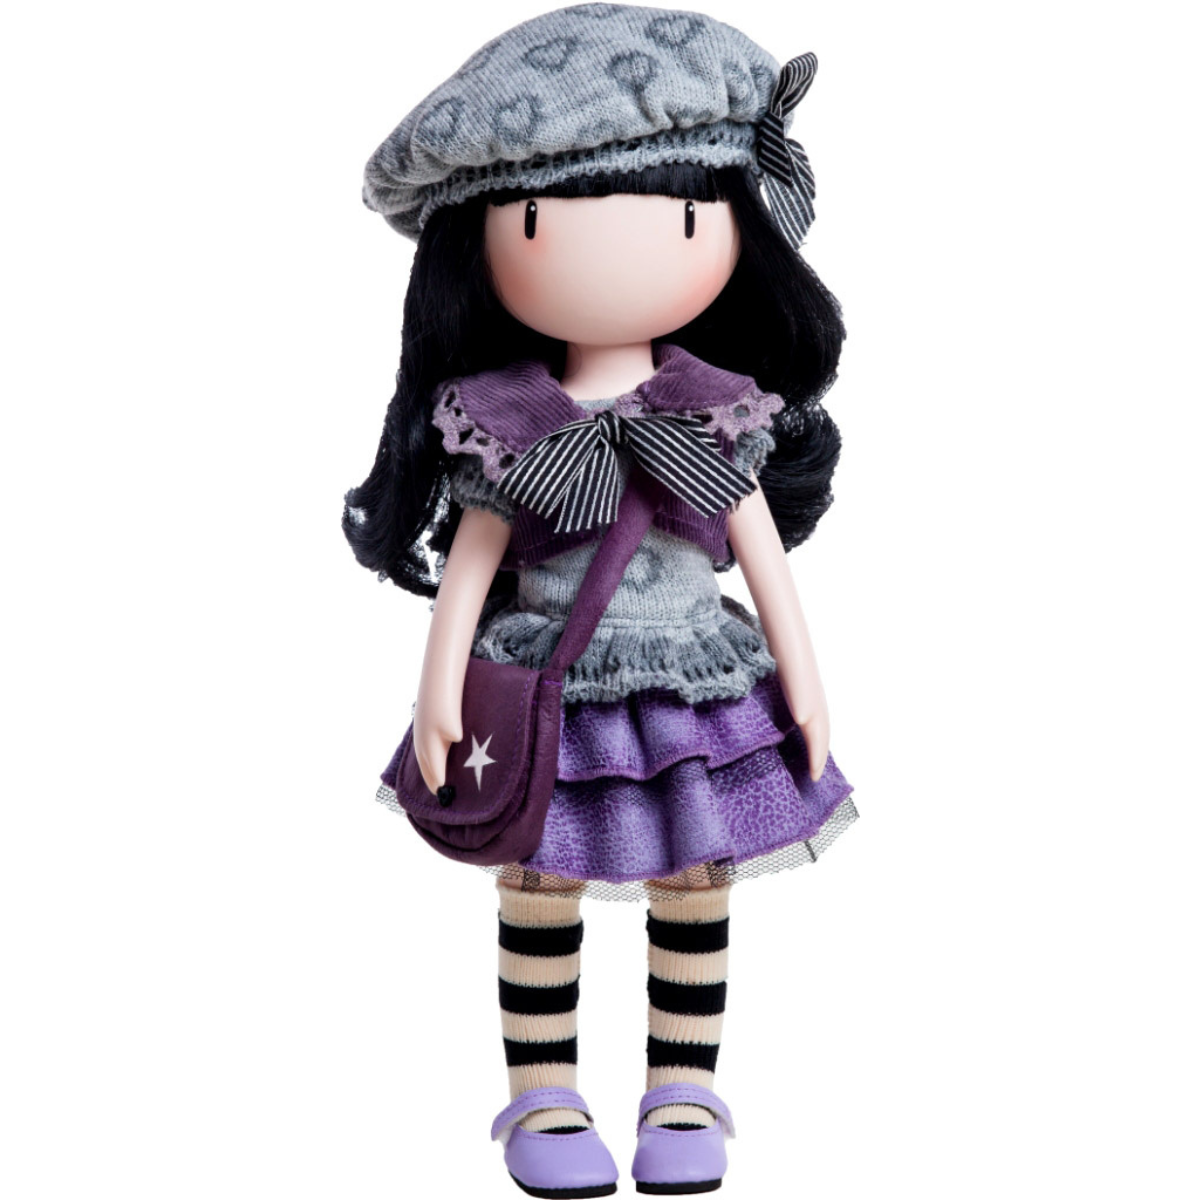 Wonderful Spanish doll Gorjuss de Santoro Little Violet 32cm 04906